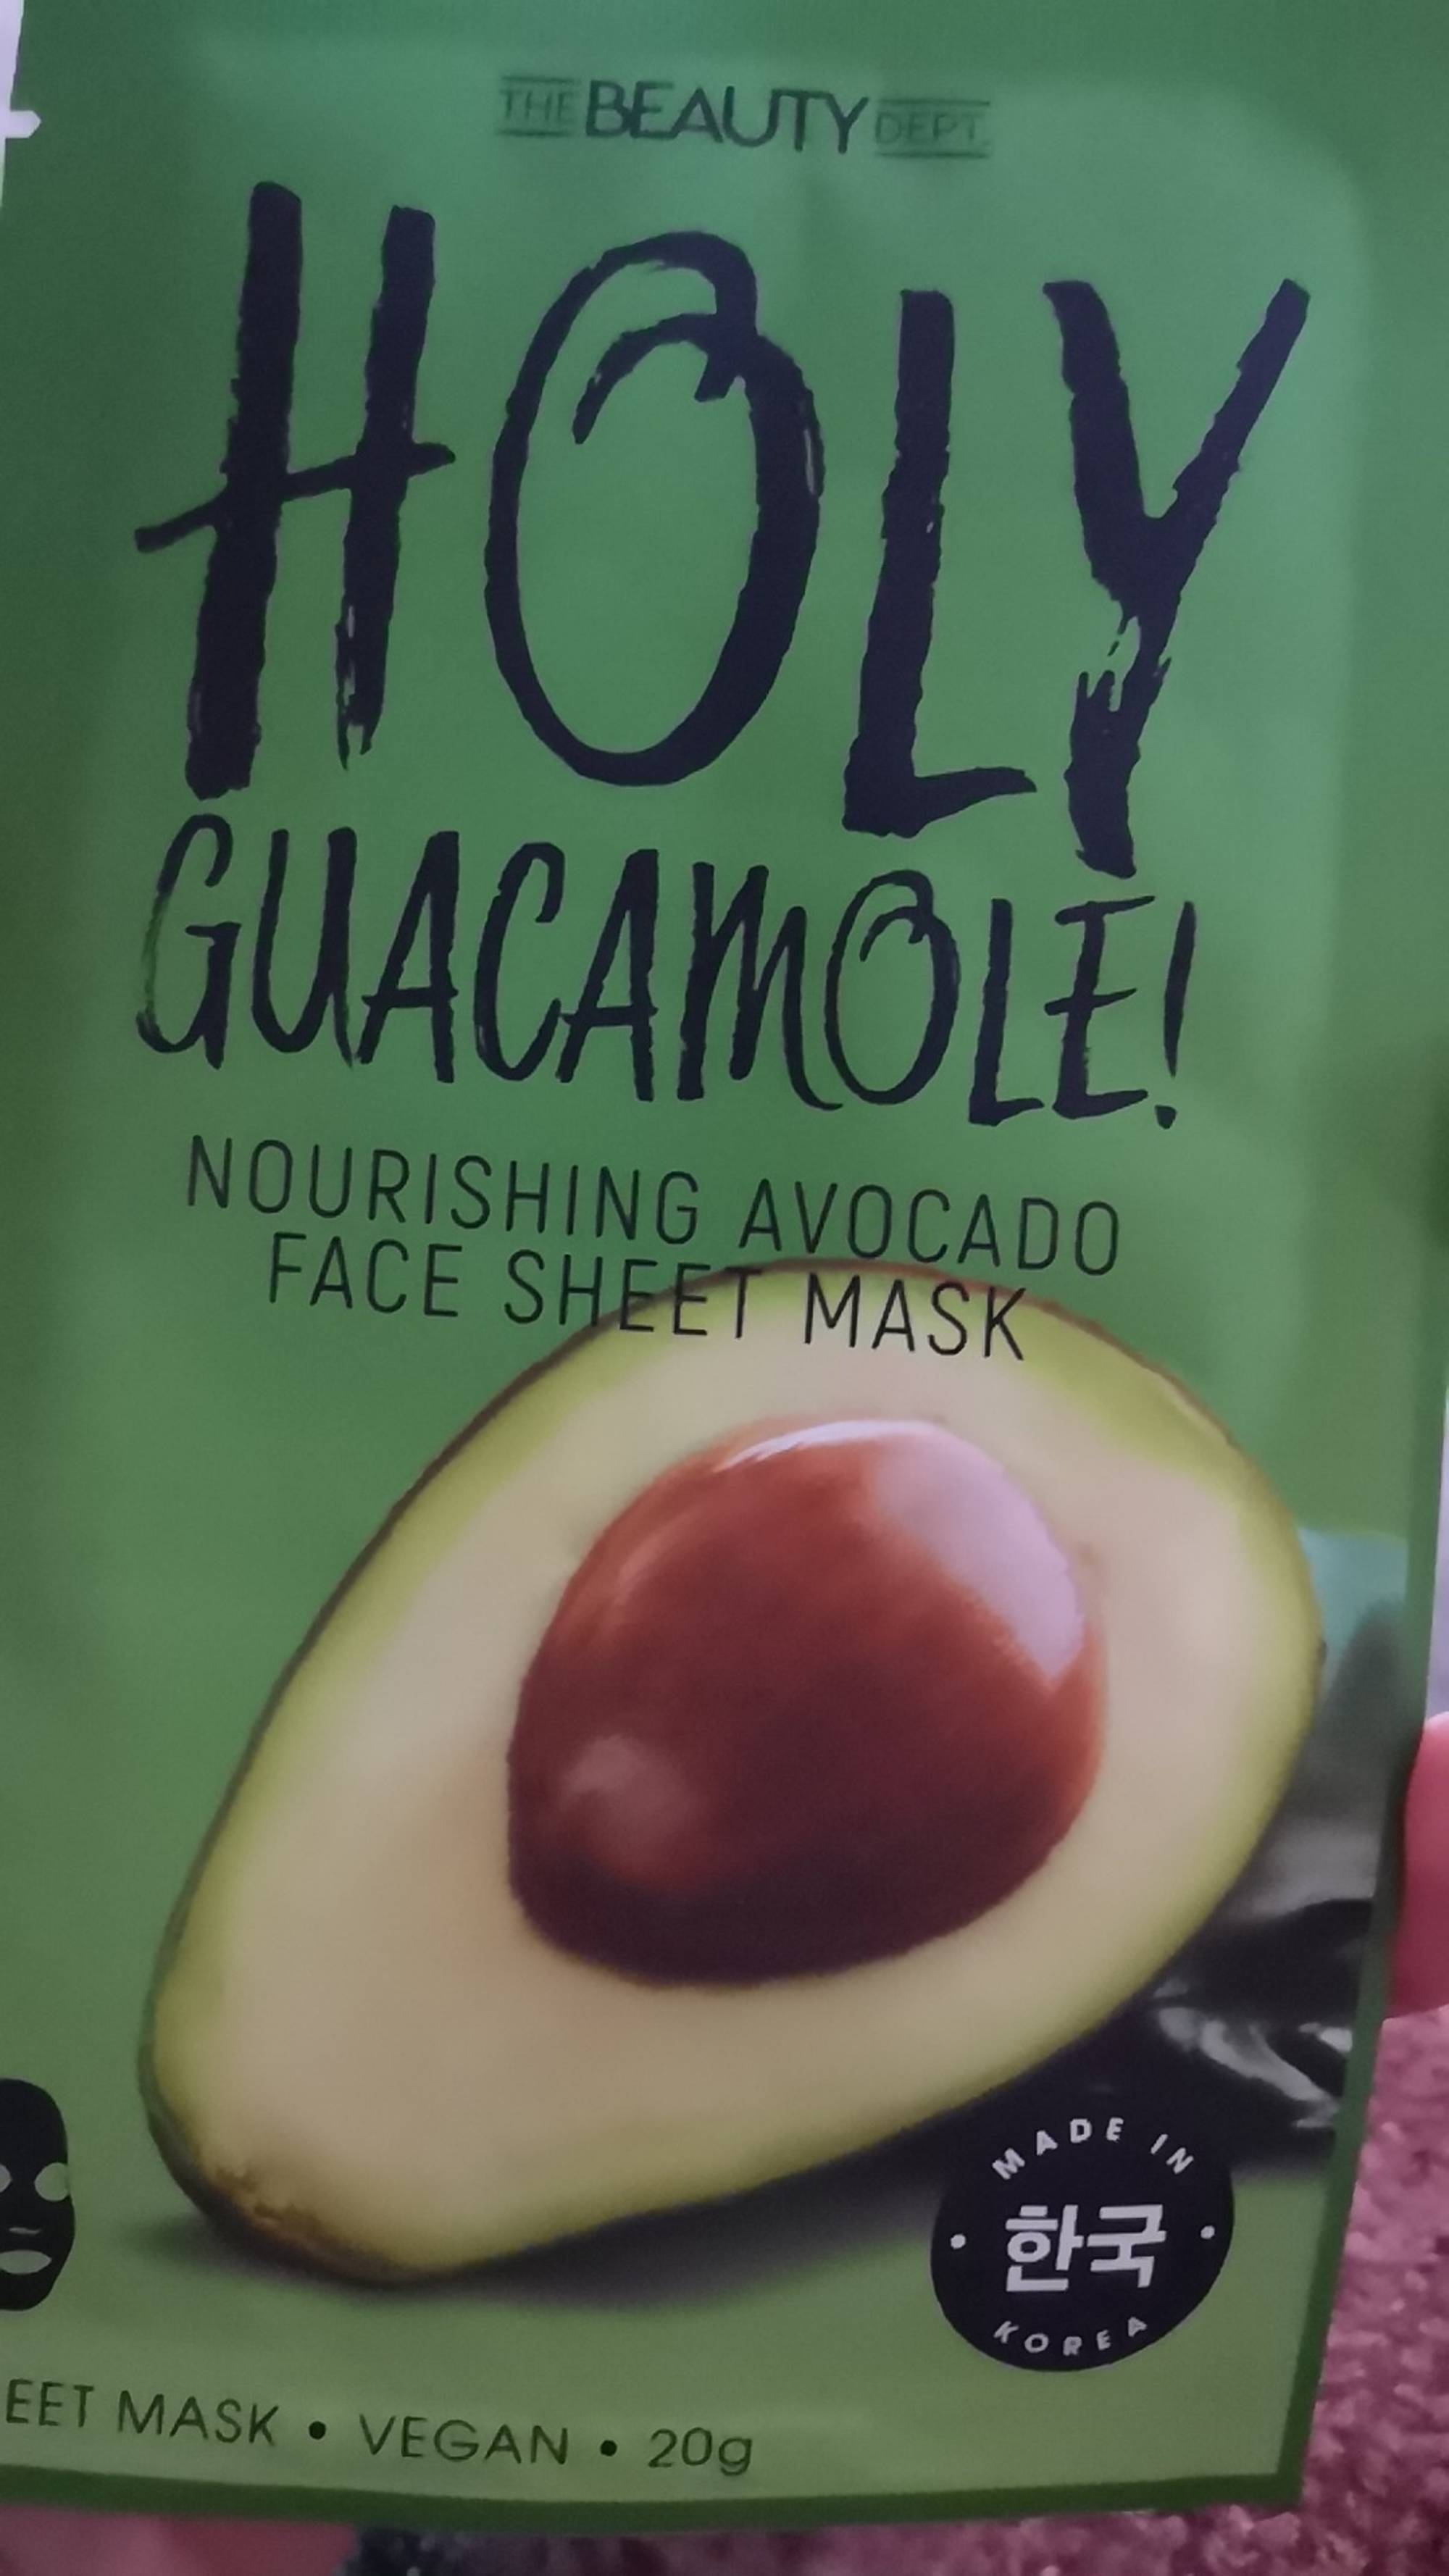 THE BEAUTY DEPT - Holy guacamole ! - Nourishing avocado face sheet mask